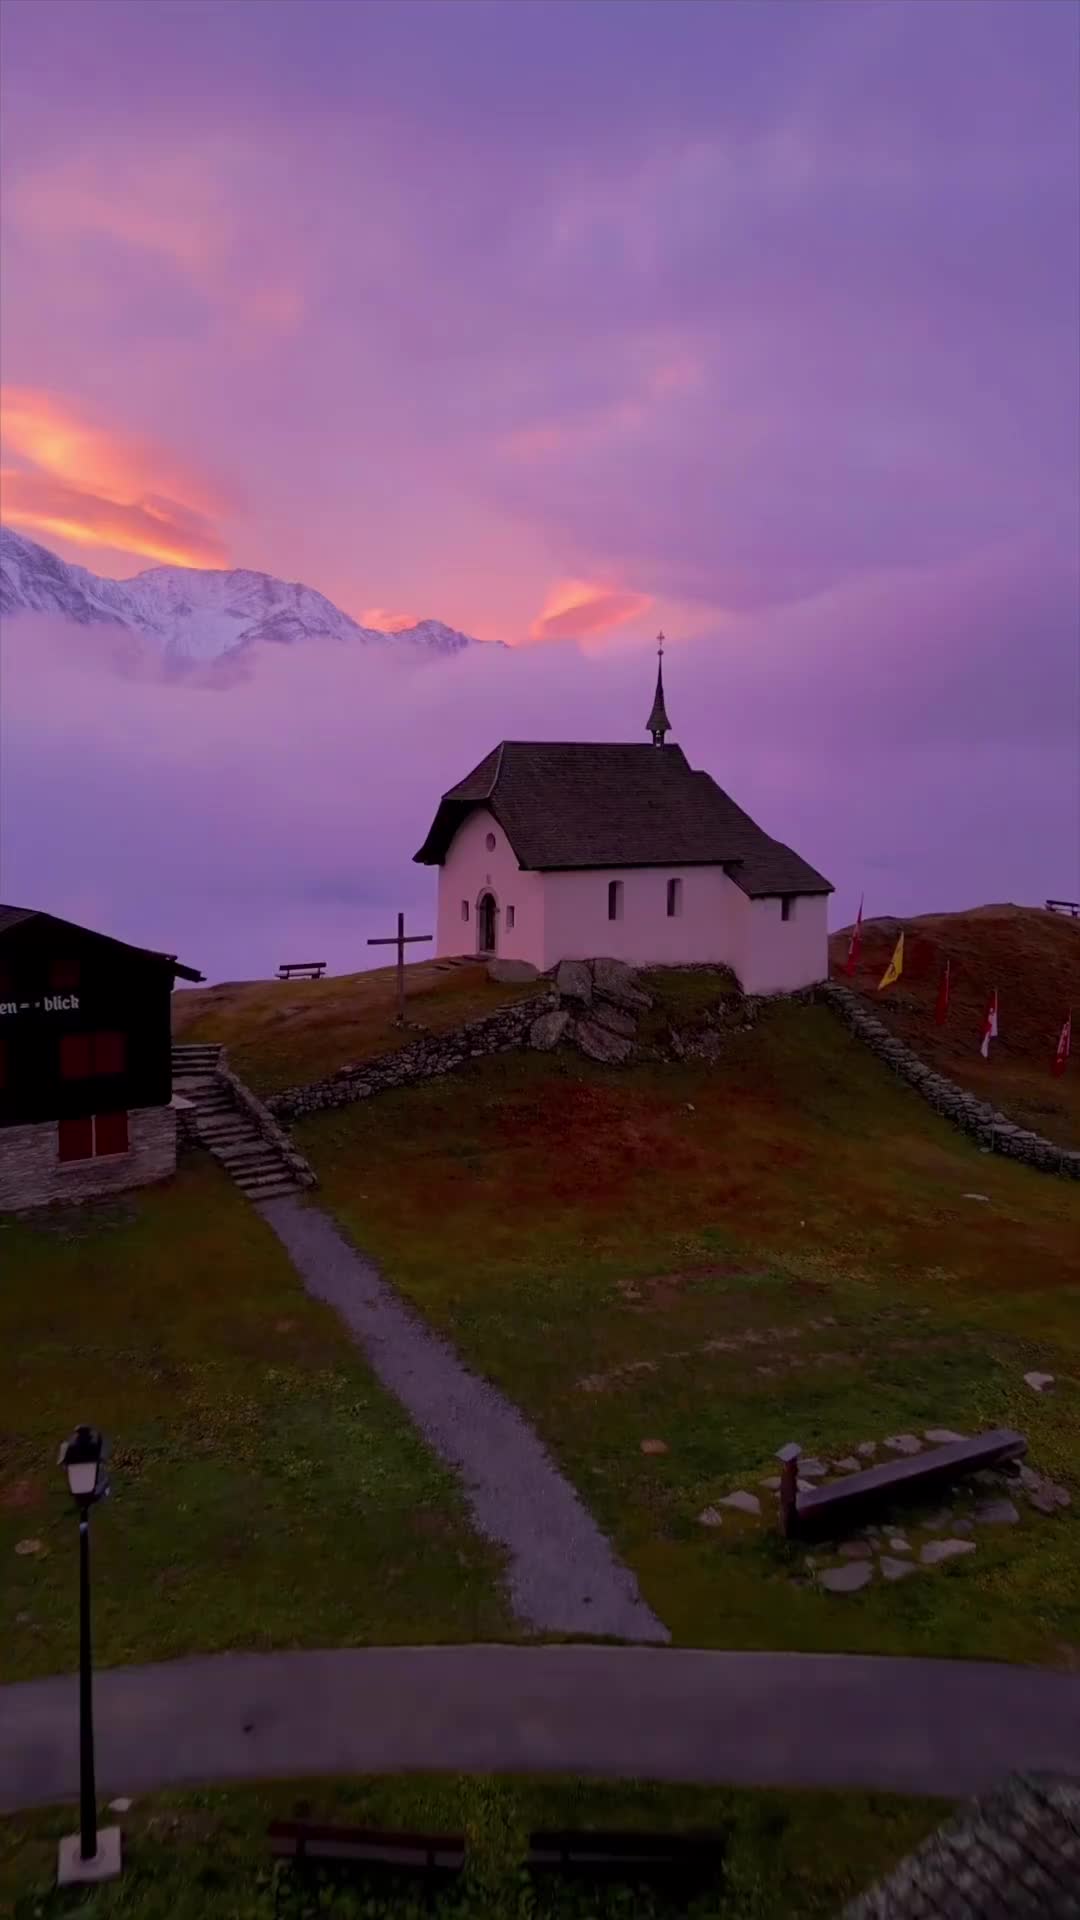 Stunning Dawn at Waldhaus Bettmeralp, Switzerland